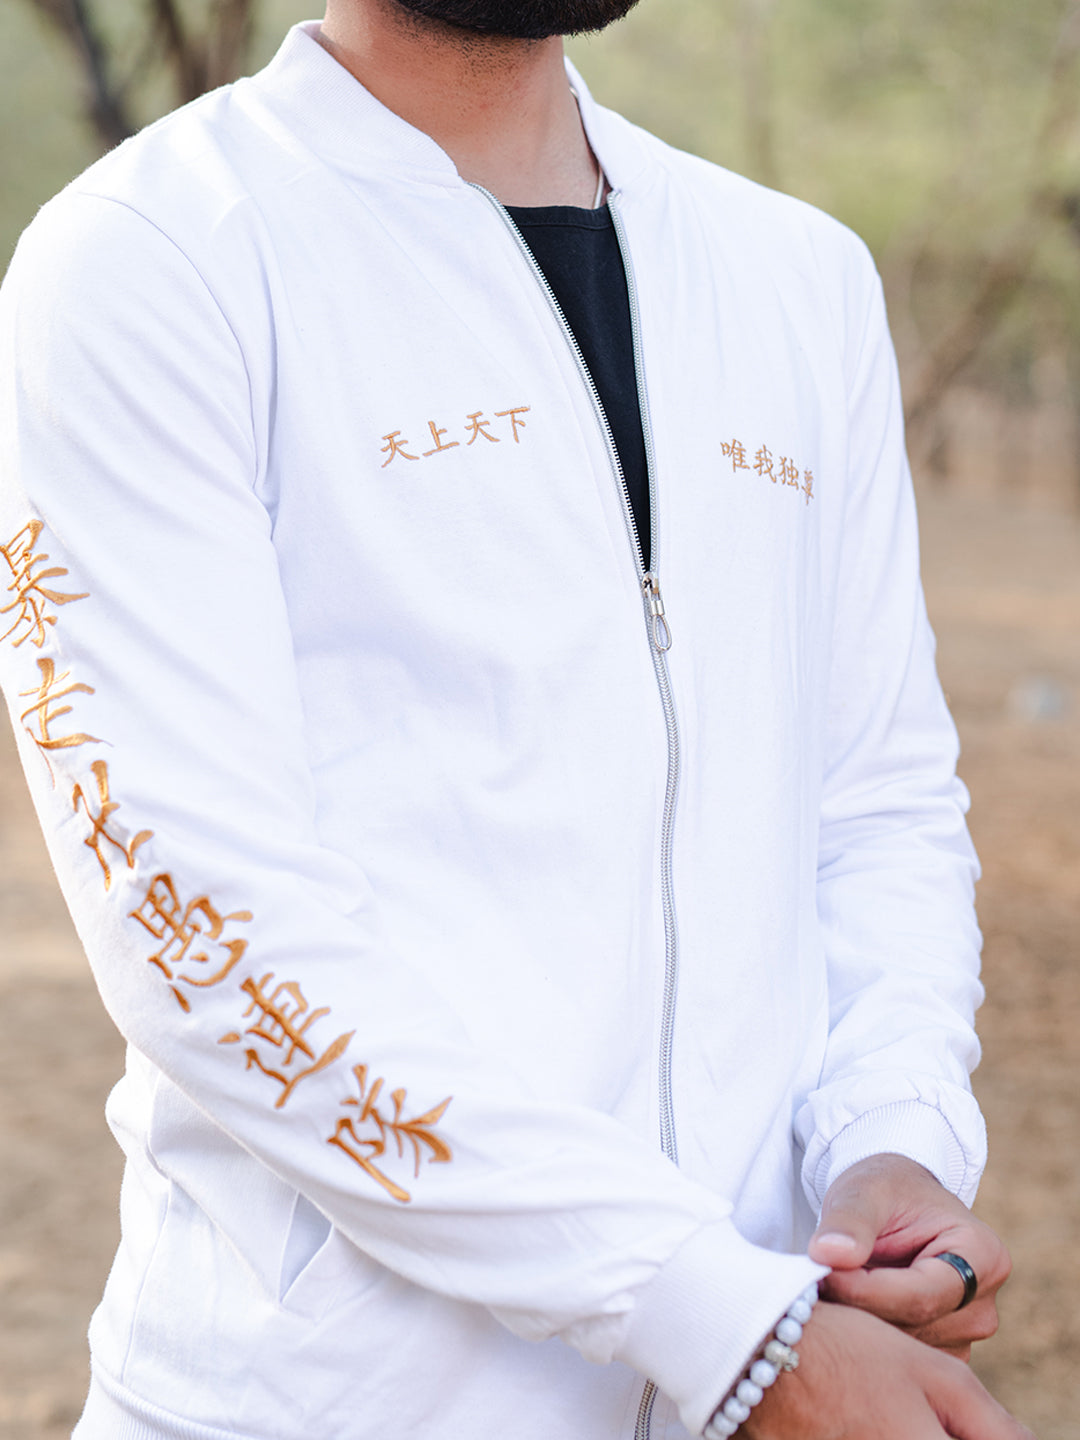 tokyo revengers jacket - Athletic apparel